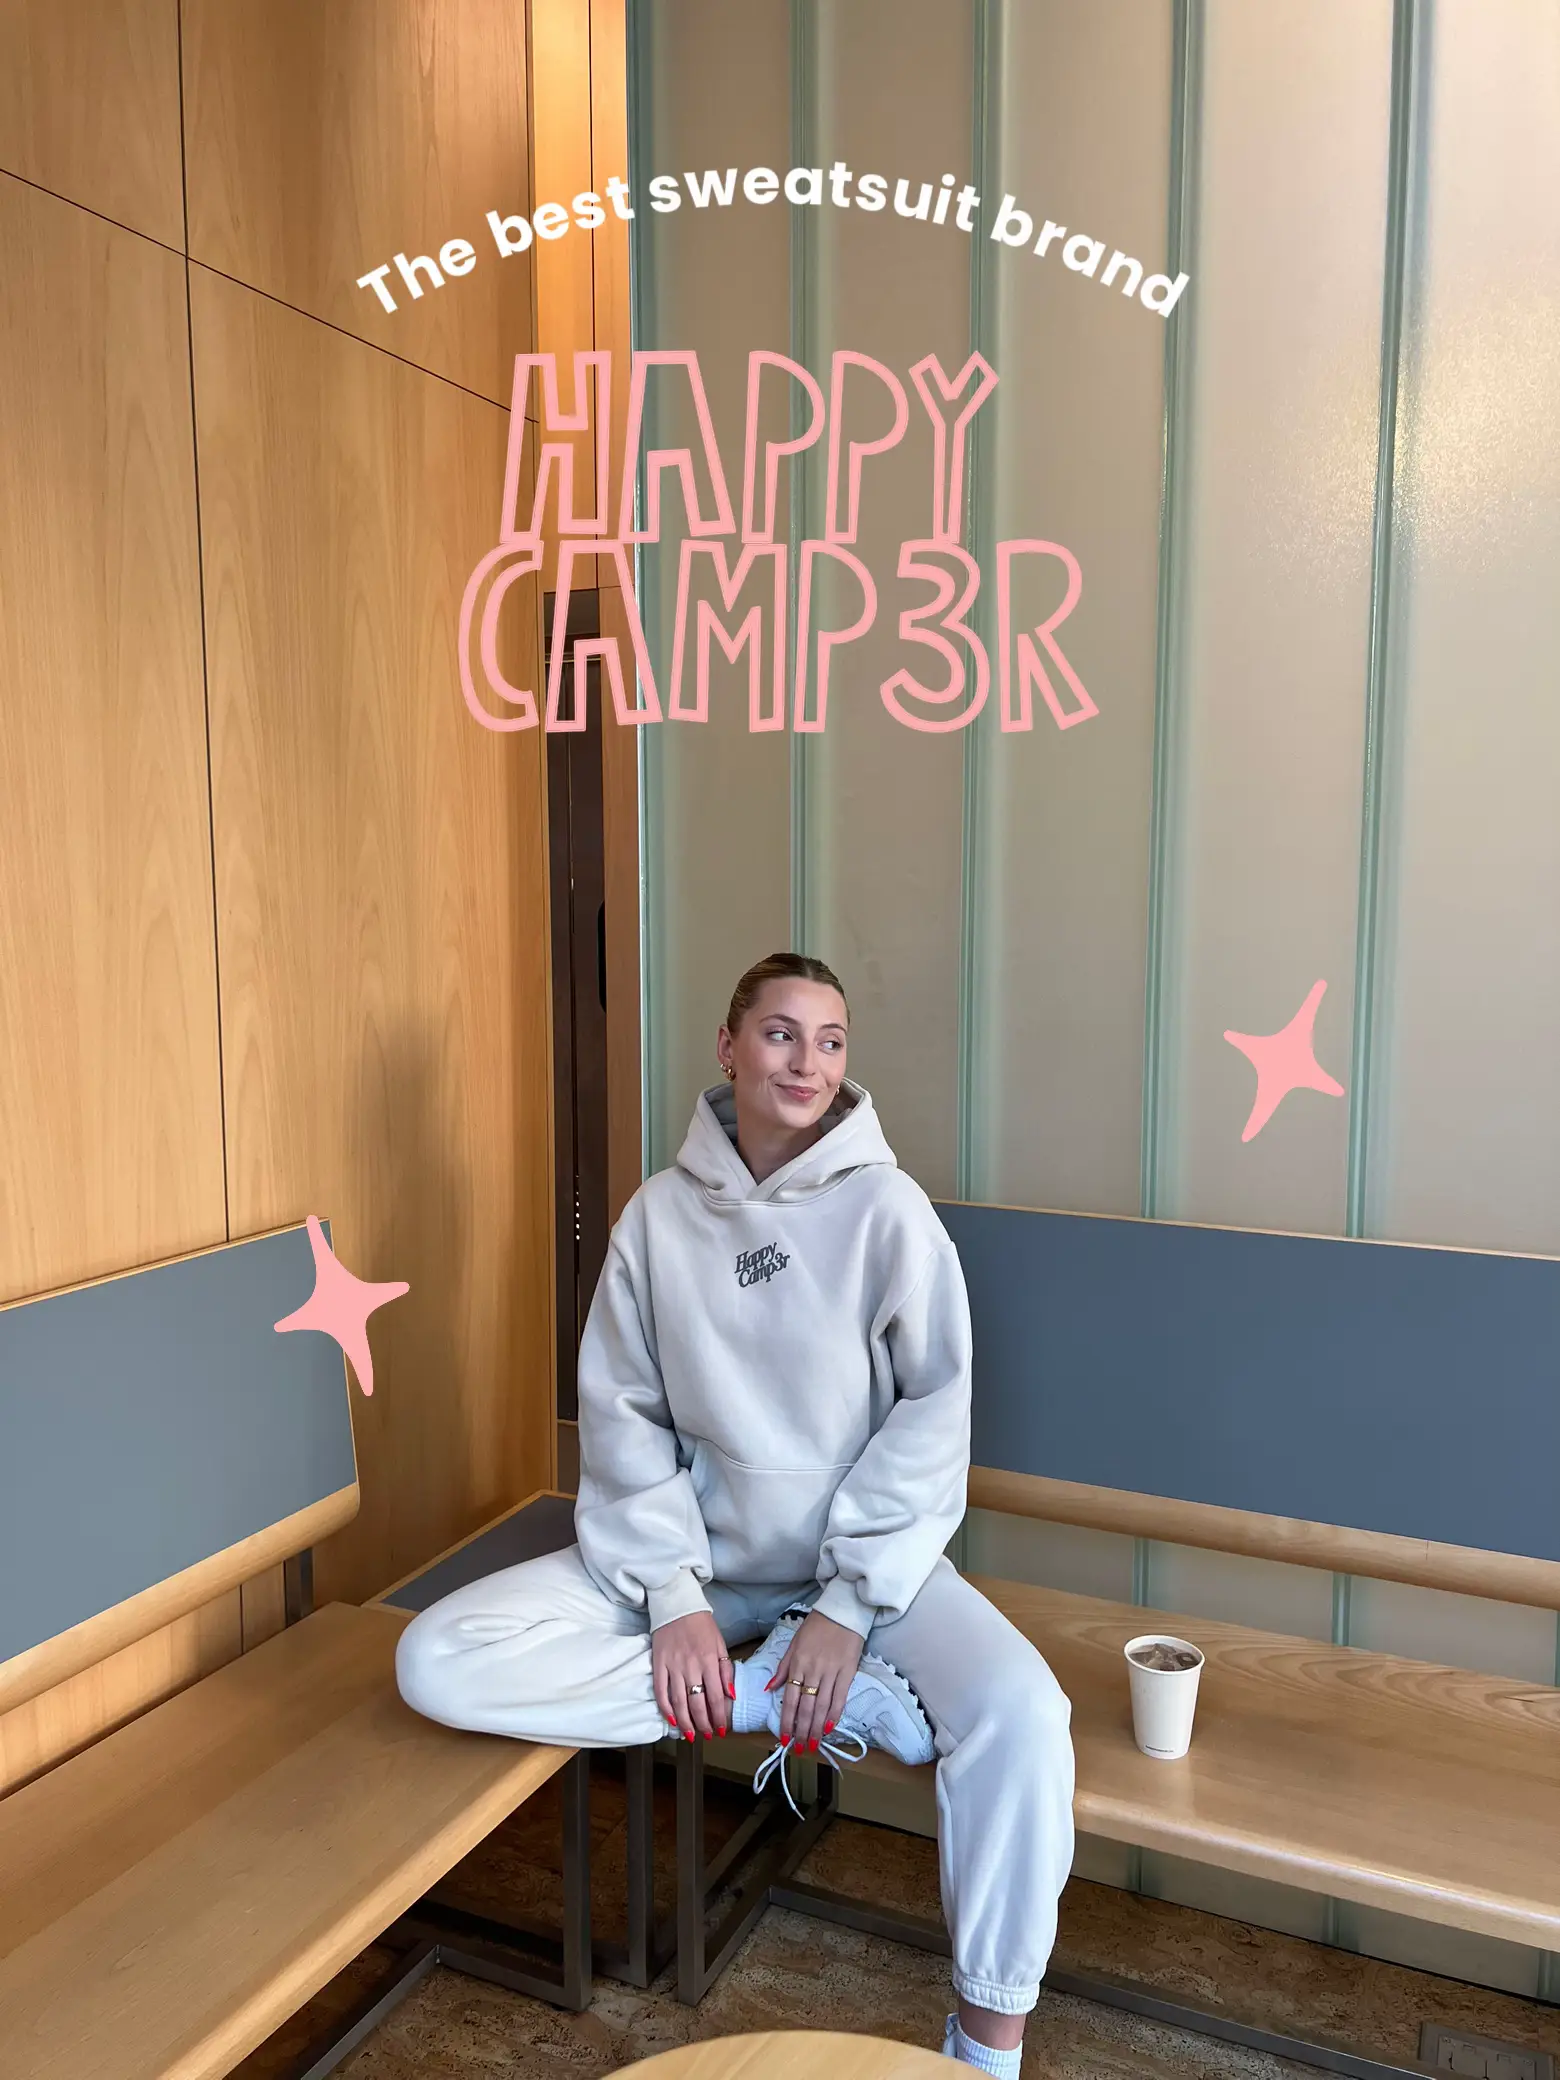 Choose Kindness Sweatpants - Cream – The Happy Camp3r